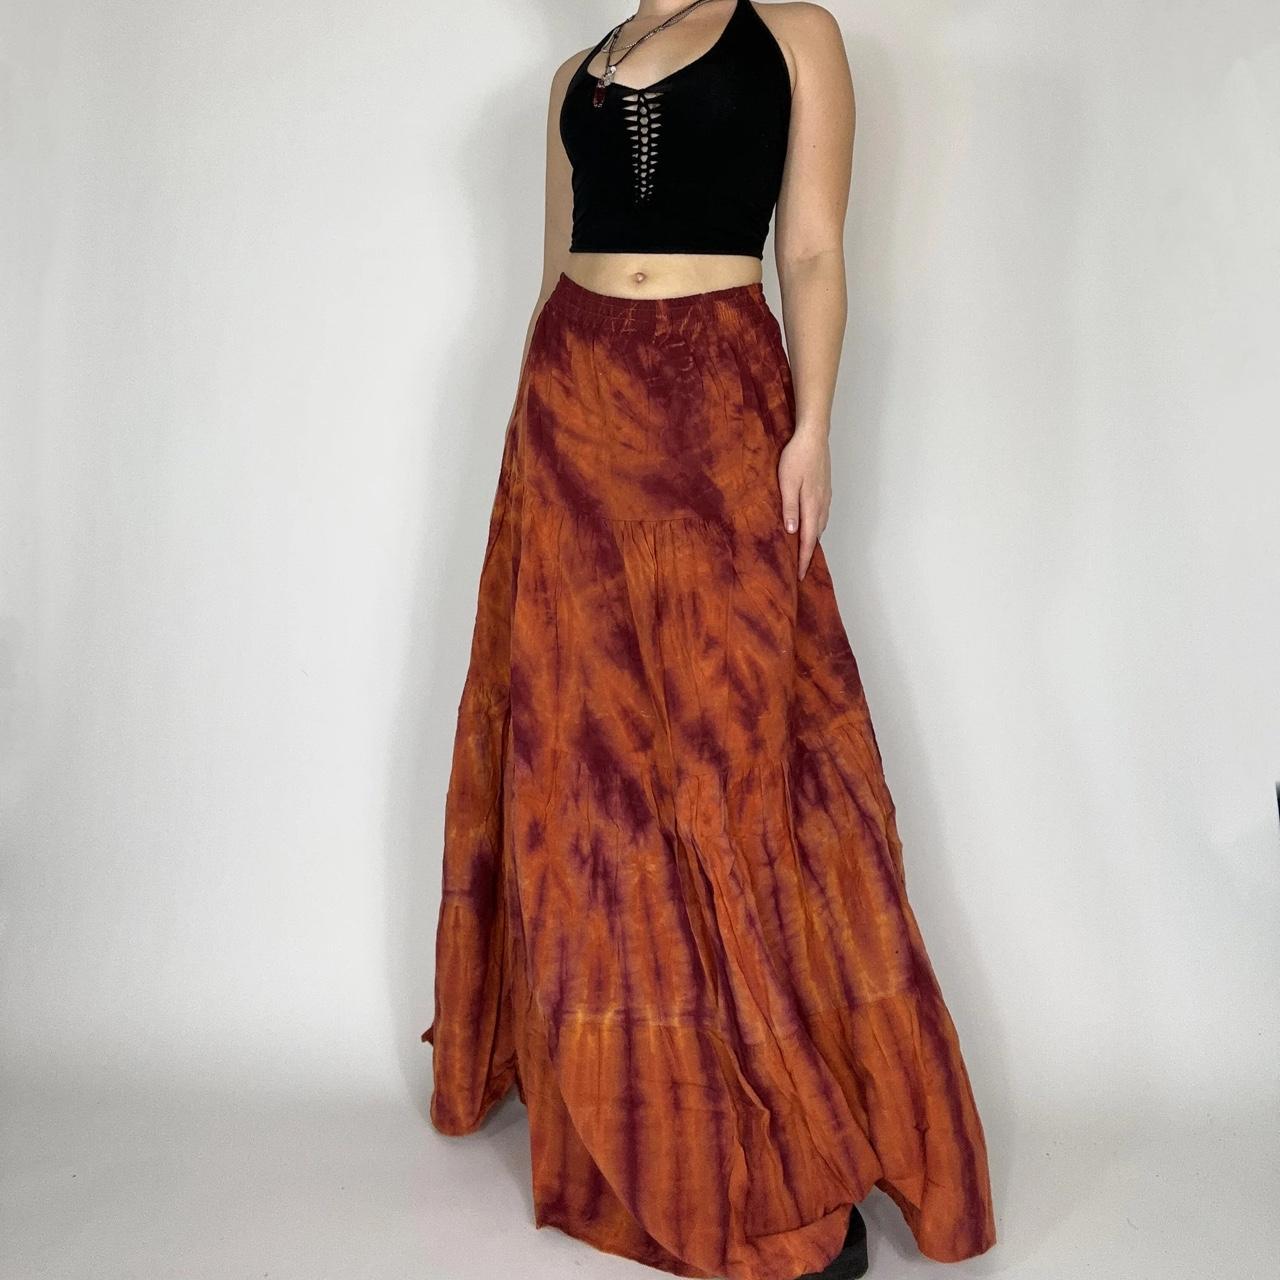 Flowing tie dye maxi skirt featuring an elastic... - Depop